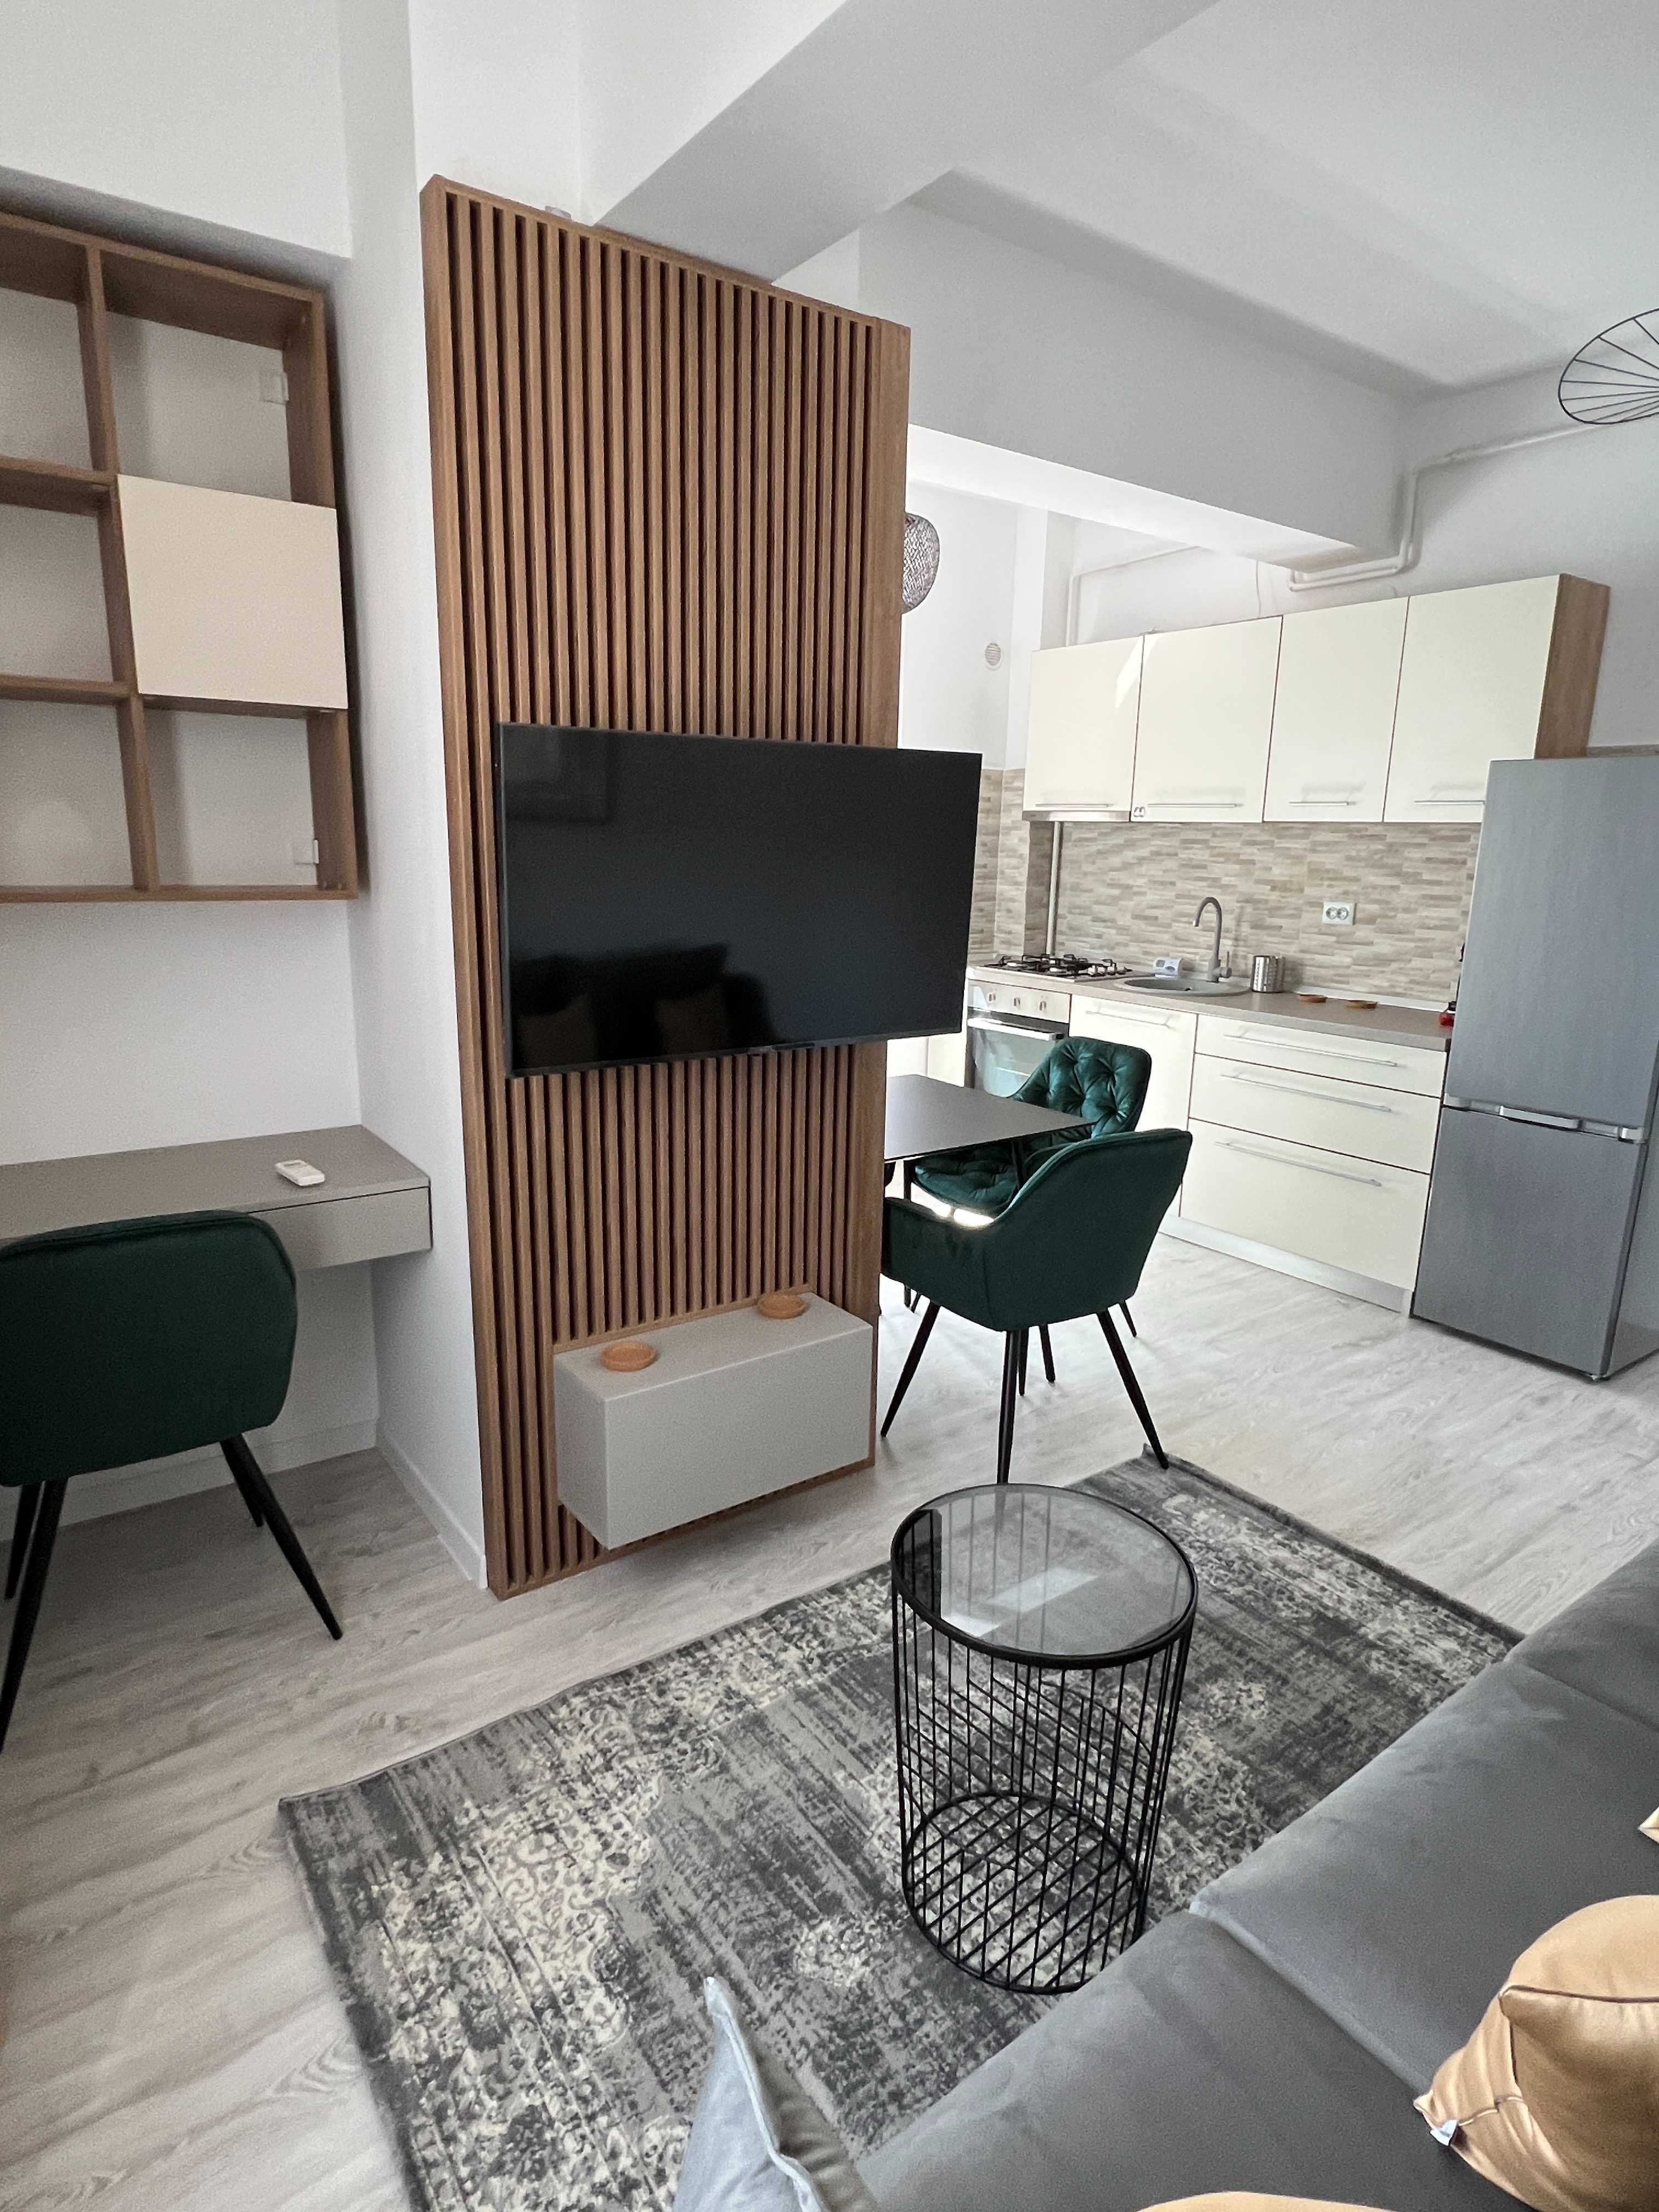 Cazare Iasi - Apartamente Moderne in Regim Hotelier